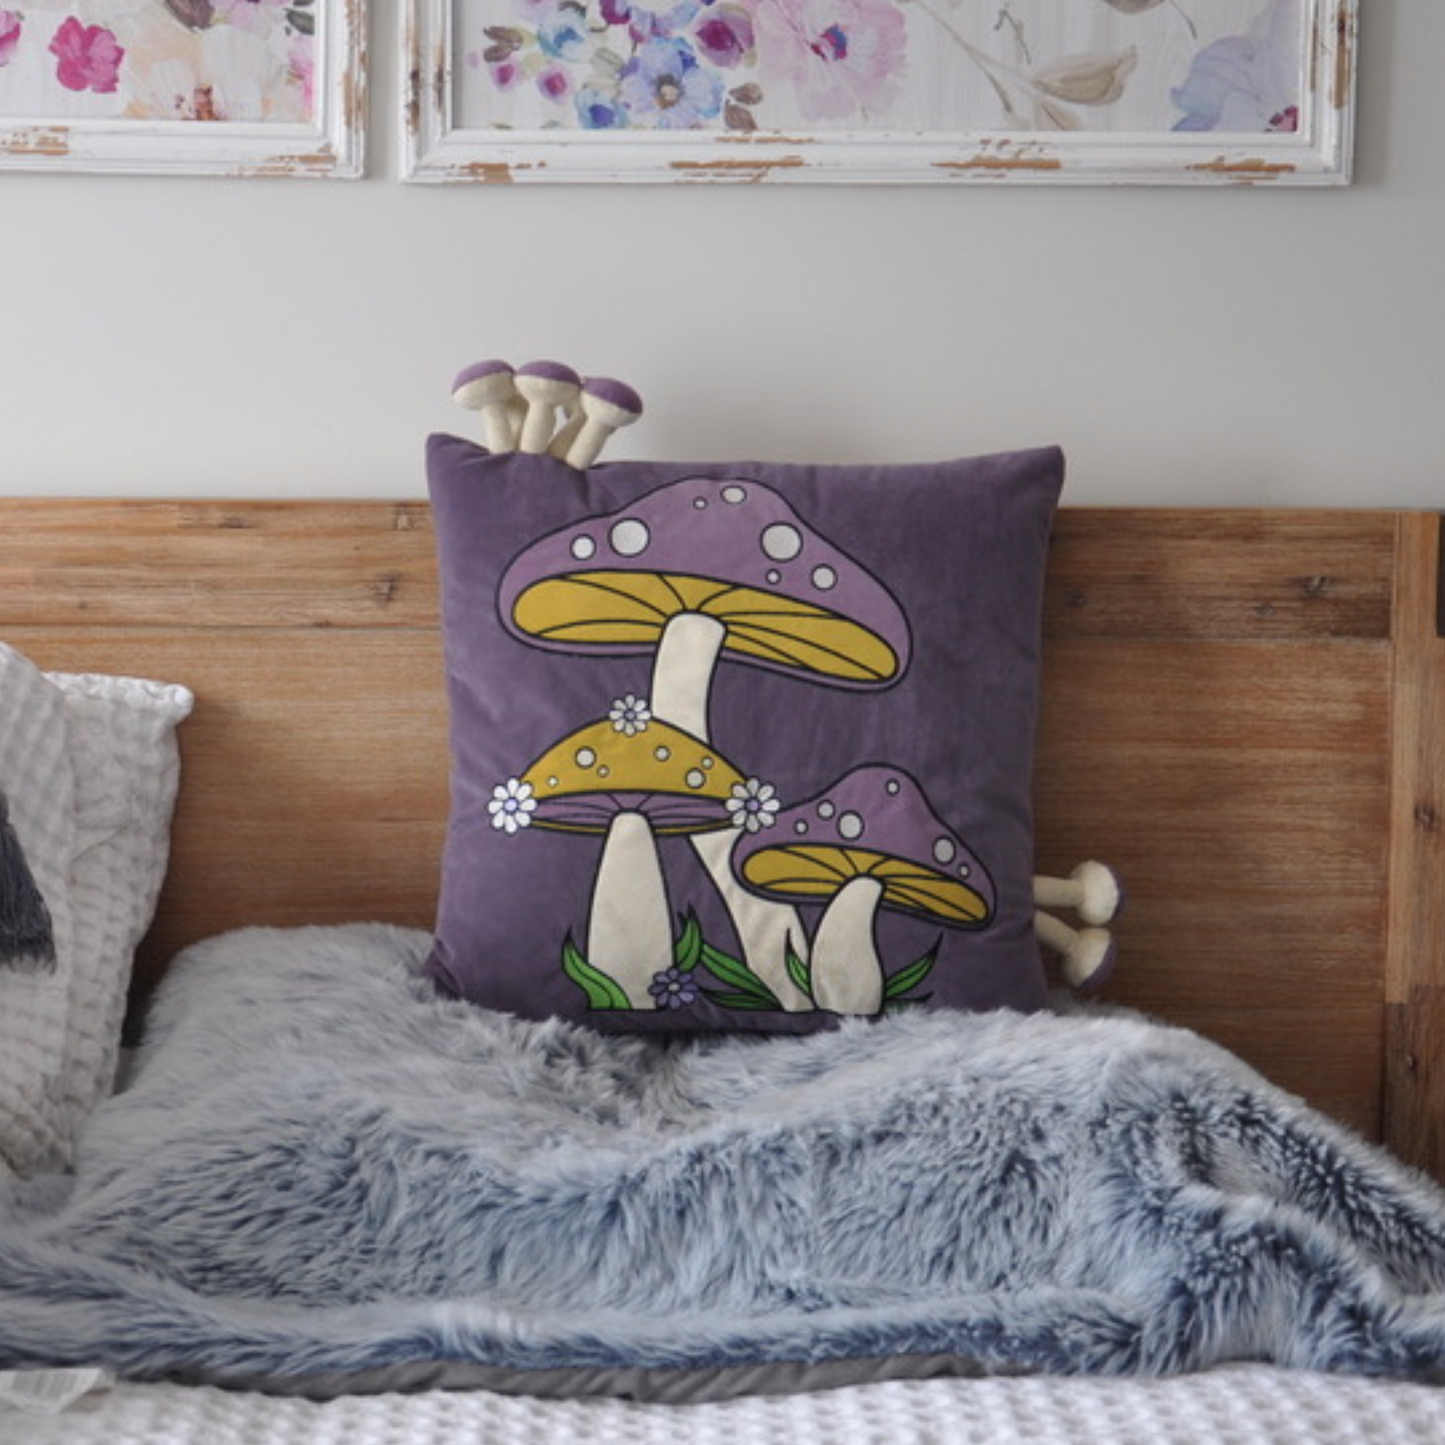 Decorative Mushroom Pillow Cover - Purple